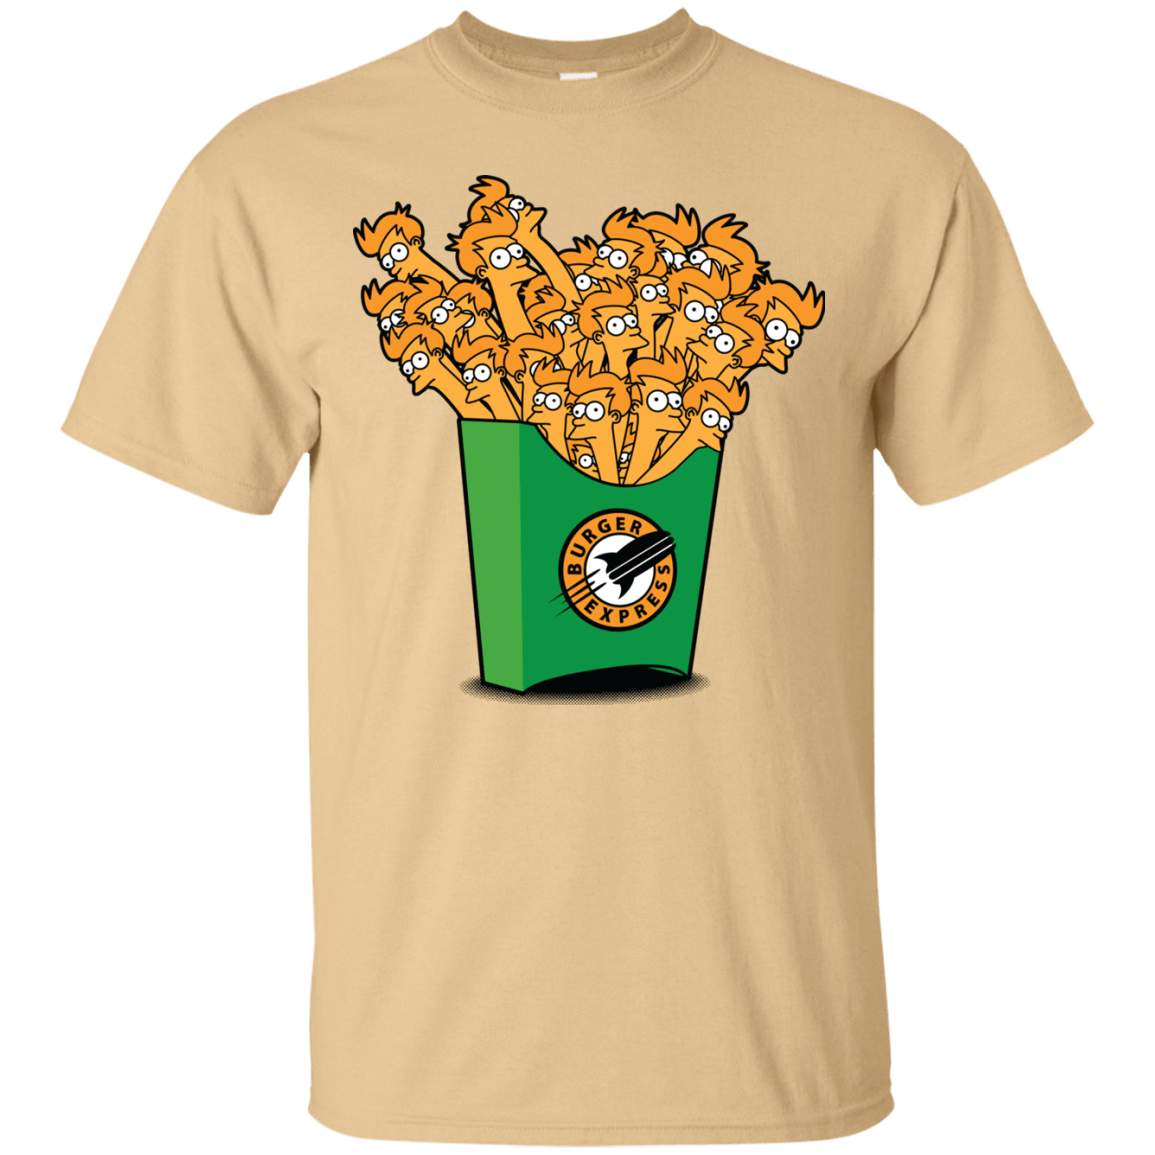 T-Shirts Vegas Gold / Small Box of Fries T-Shirt